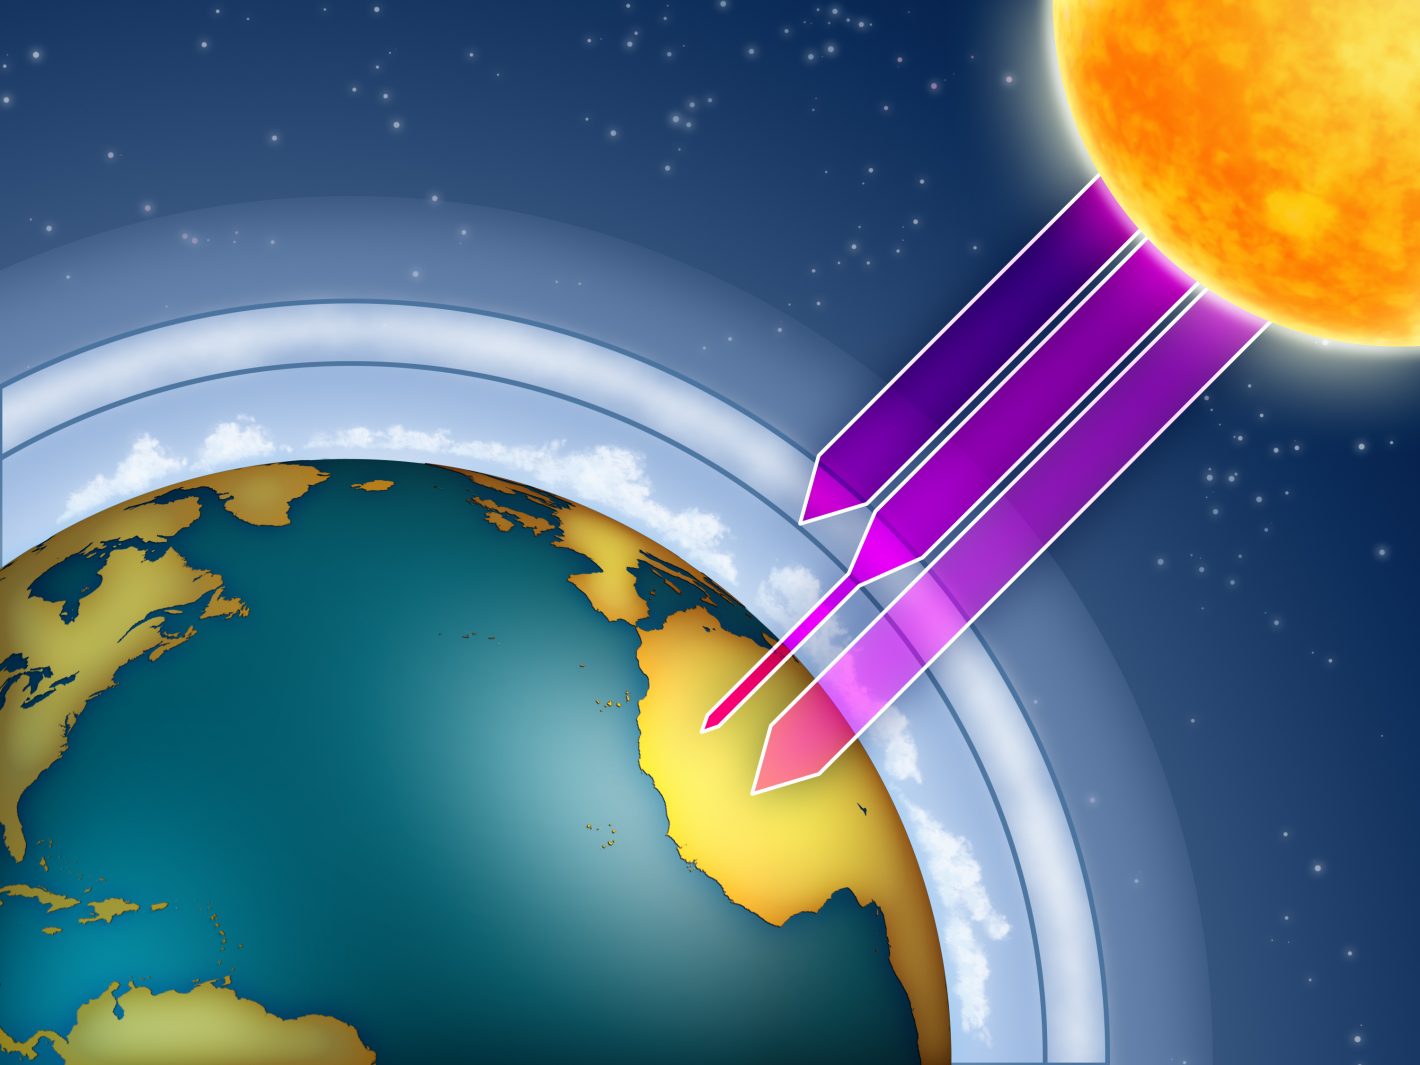 Atmospheric ozone filtering the sun ultraviolet rays. Digital illustration.